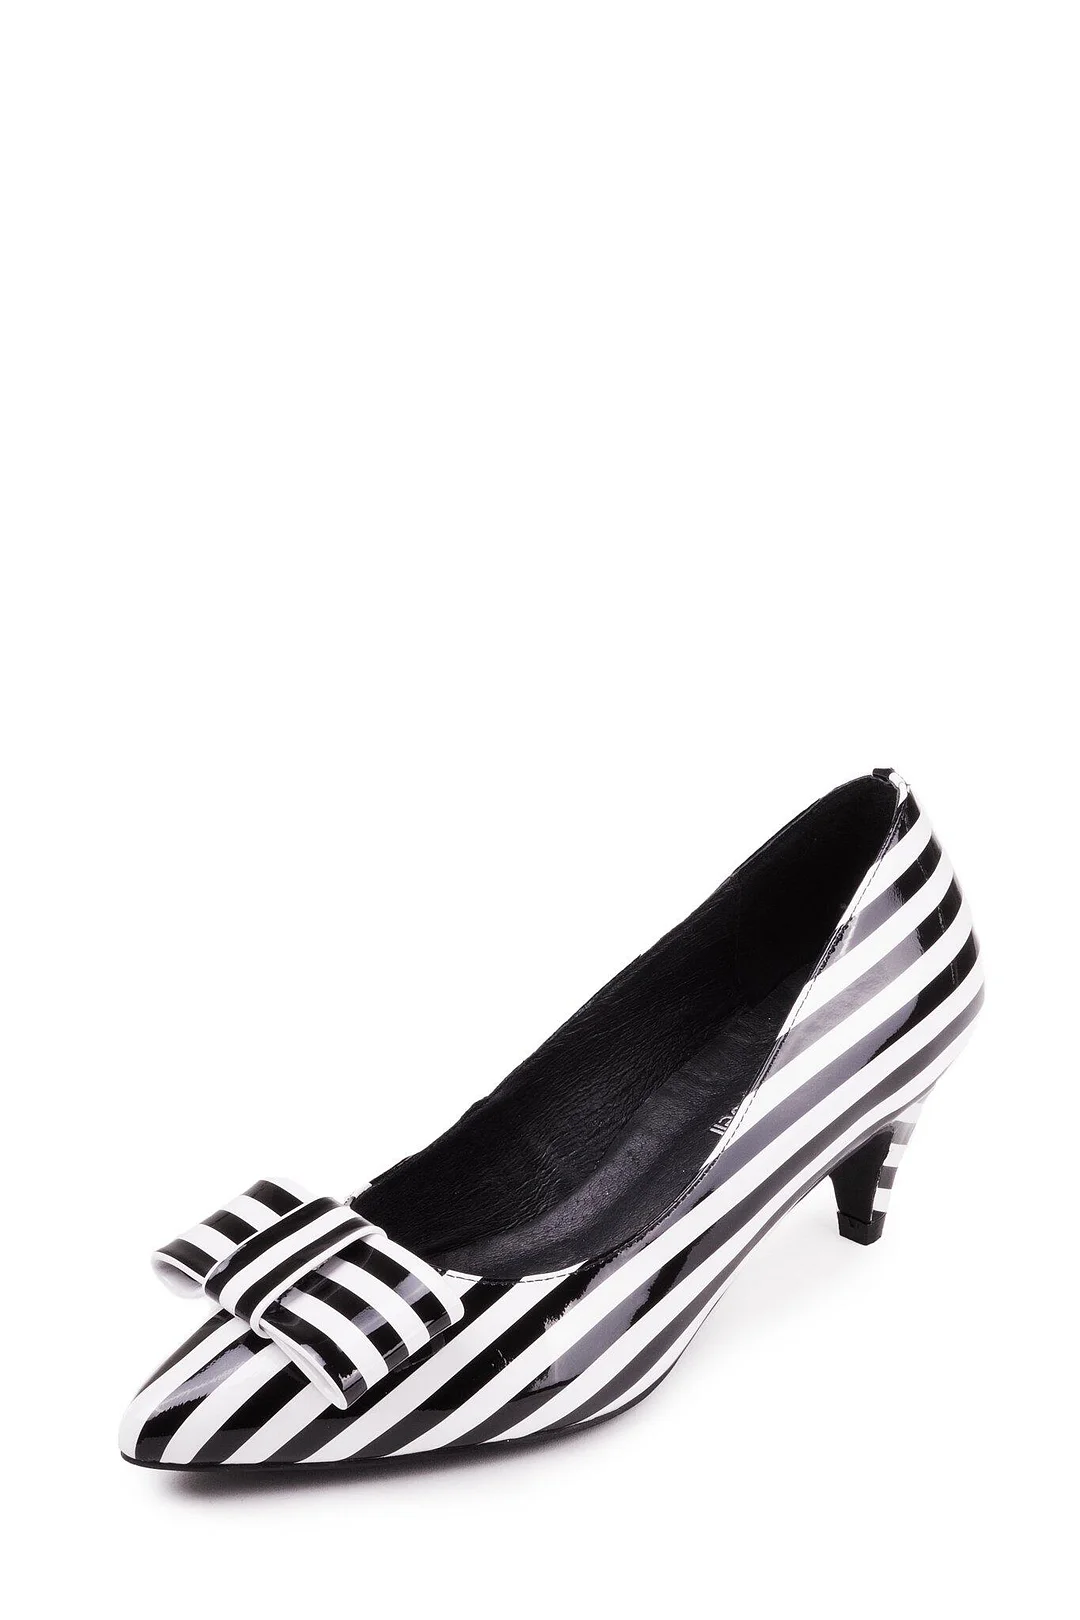 Custom Made Black and White Stripes Kitten Heel Pumps Nicepairs